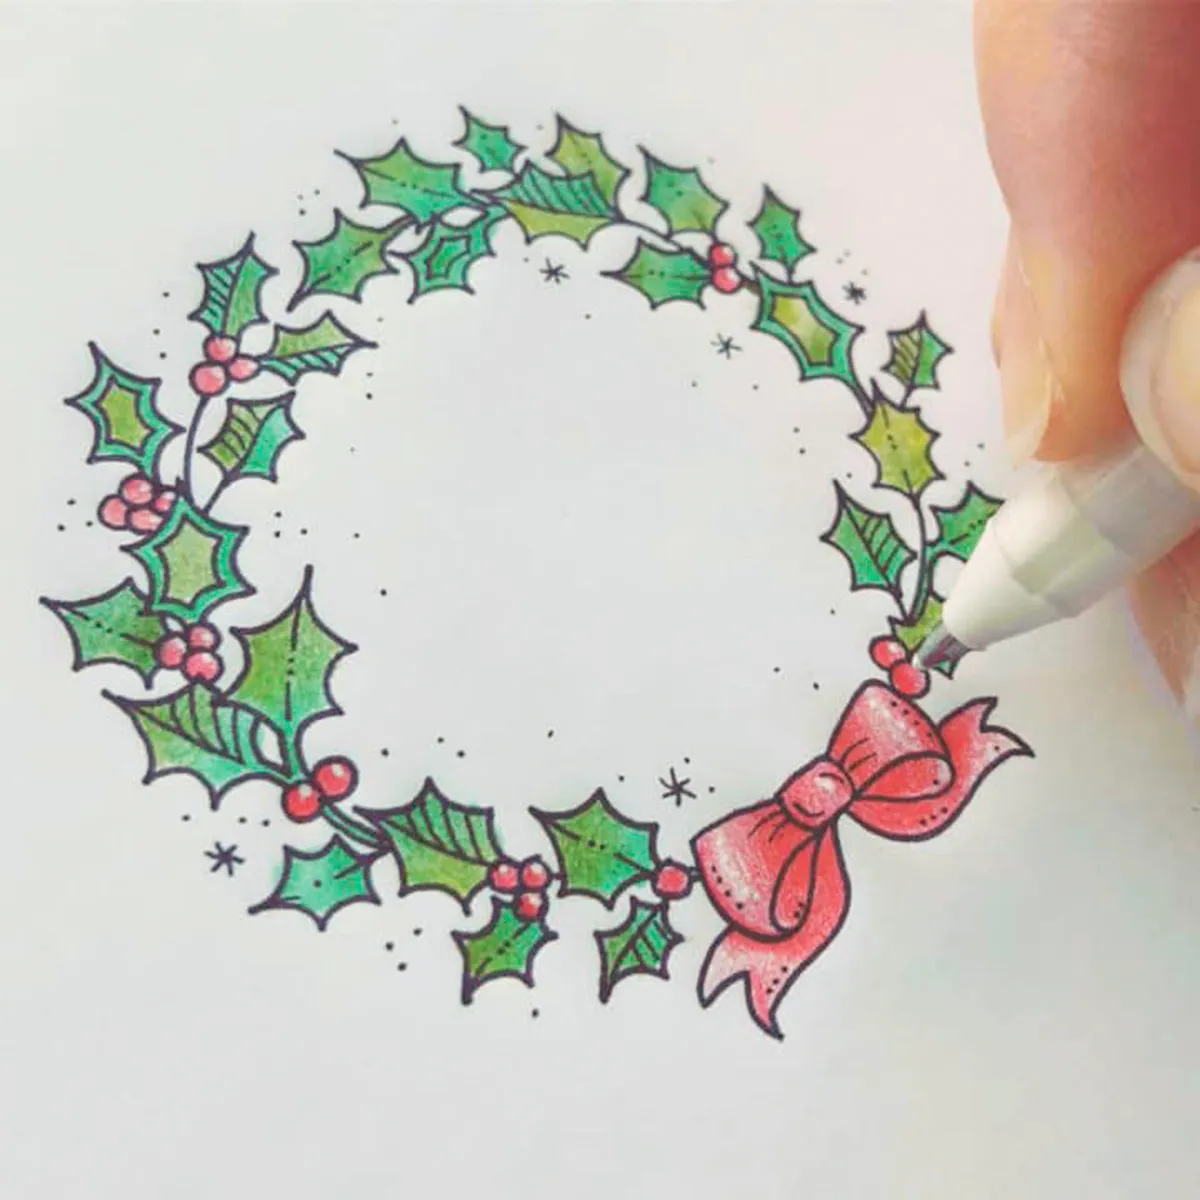 30 easy Christmas drawings to lift your spirits this festive season -  Gathered